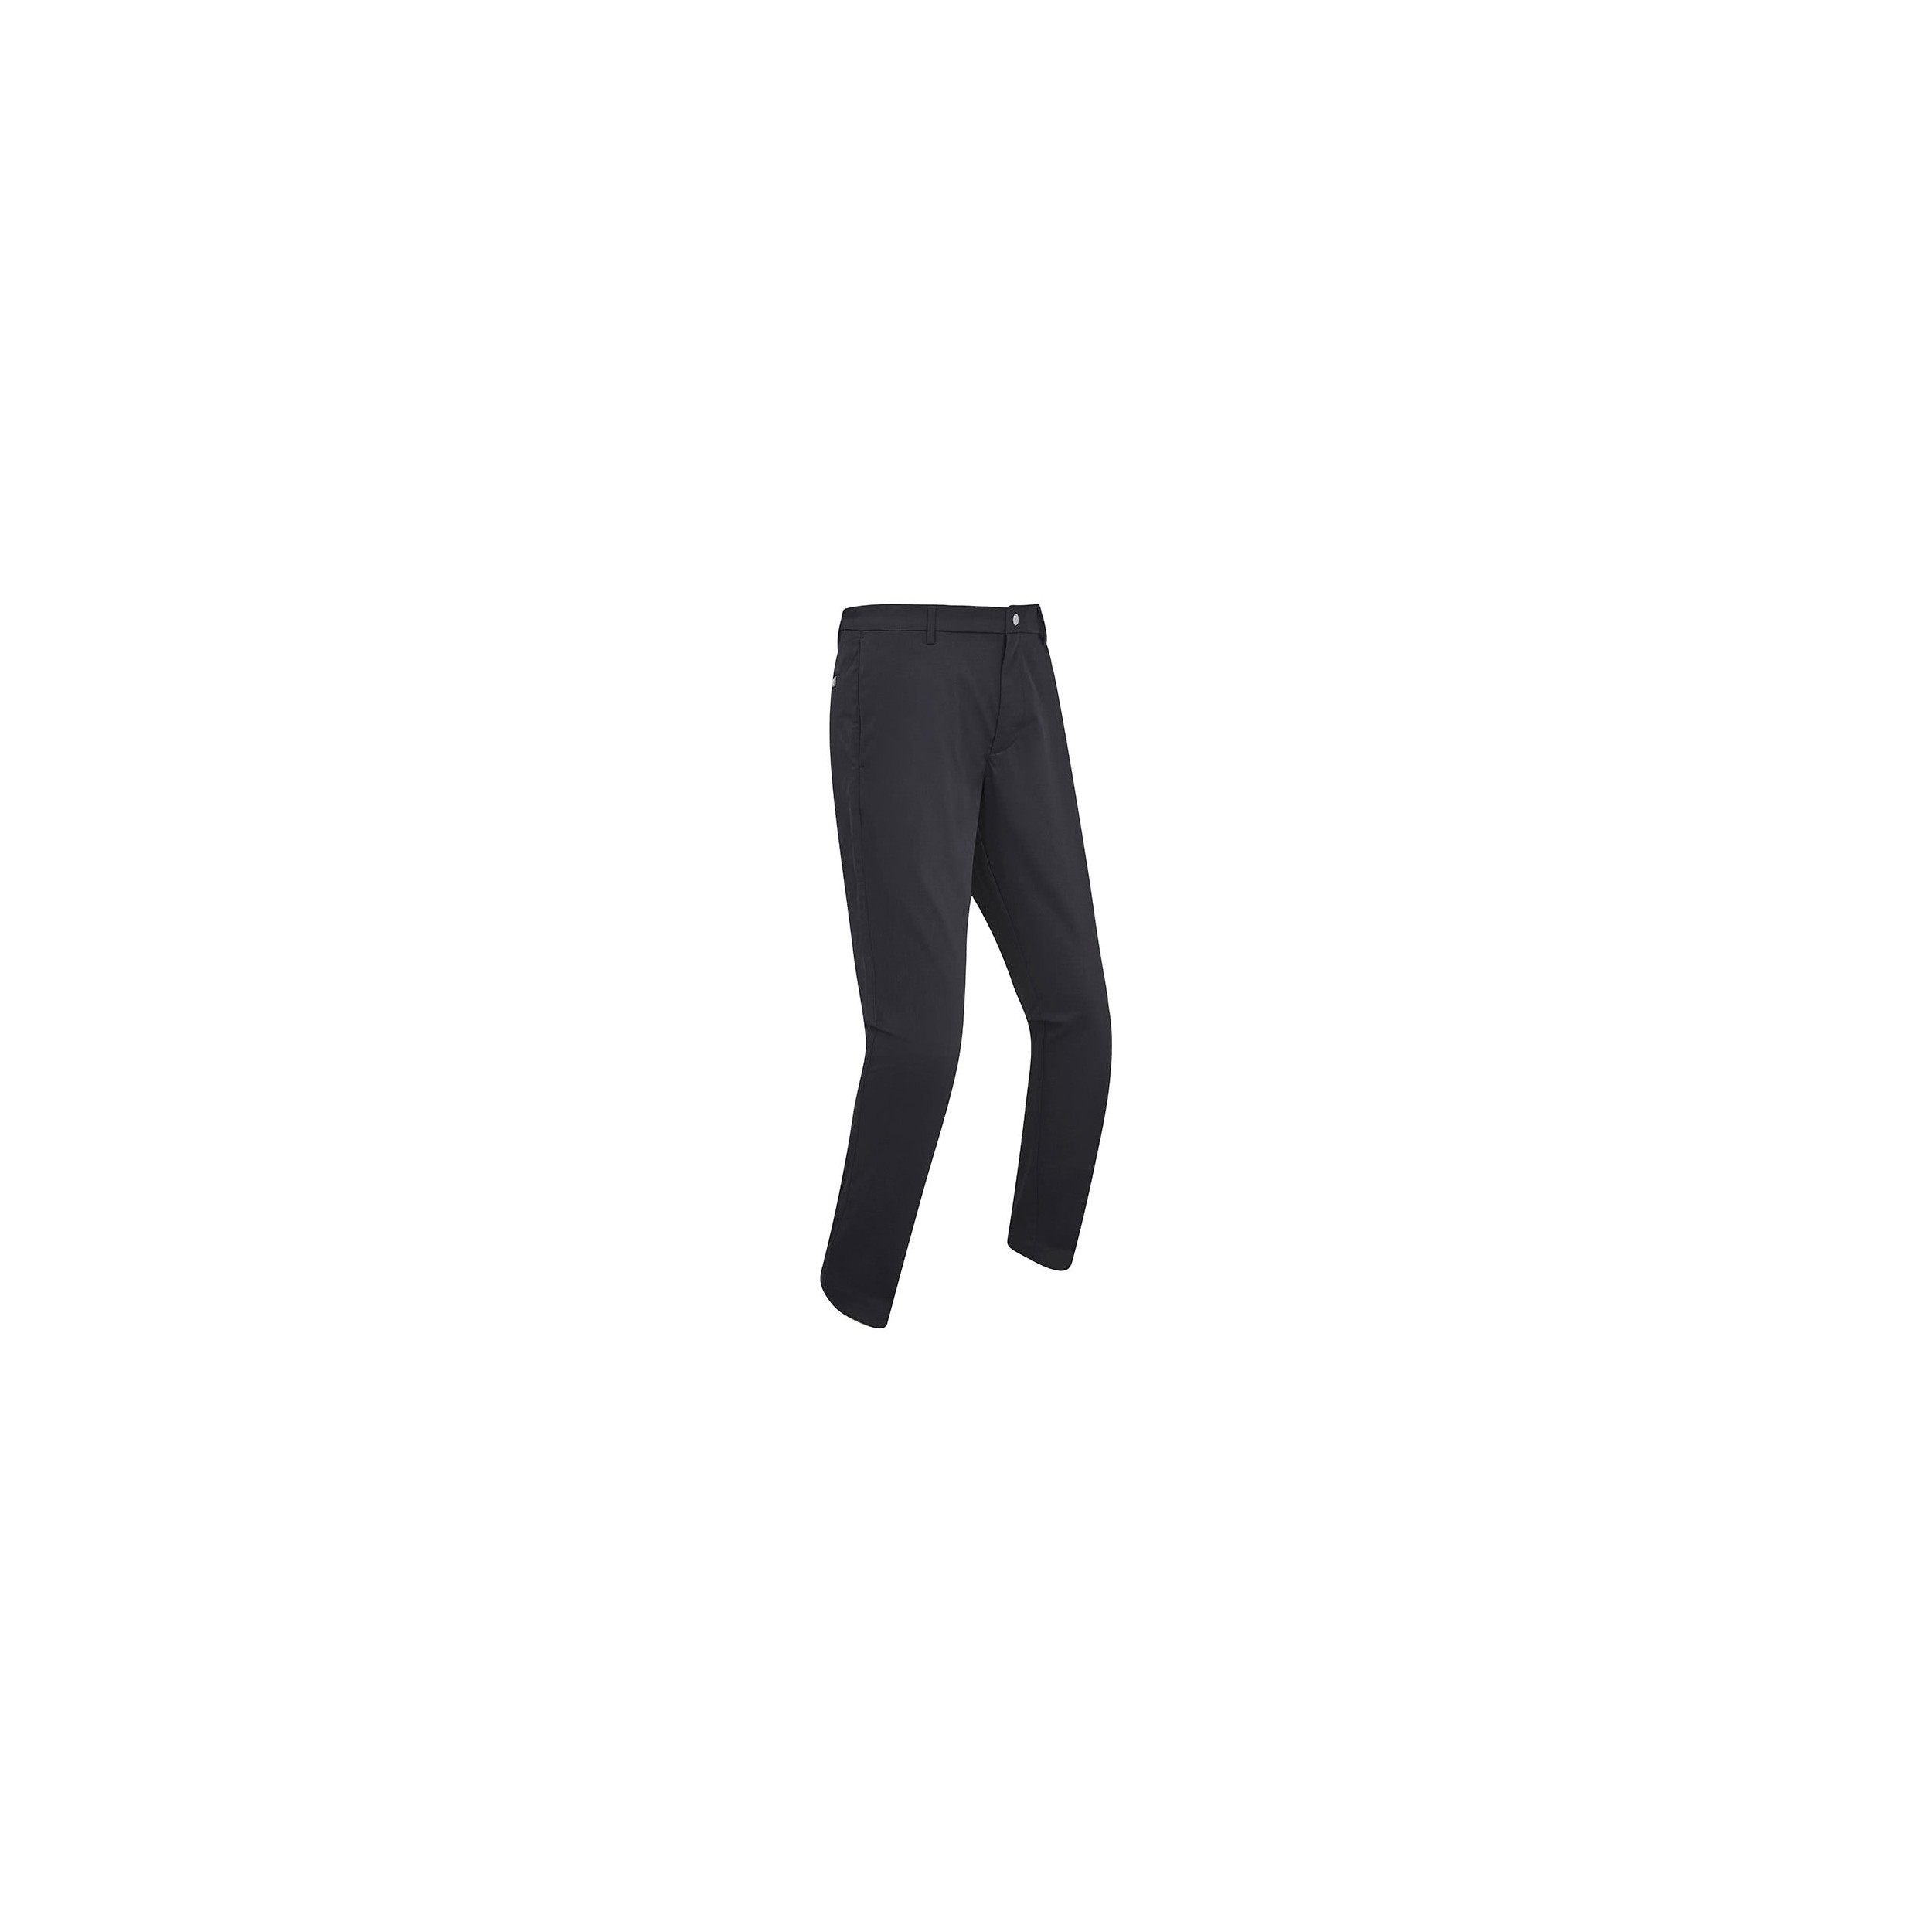 FJ Lite Slim Fit Trouser 2019